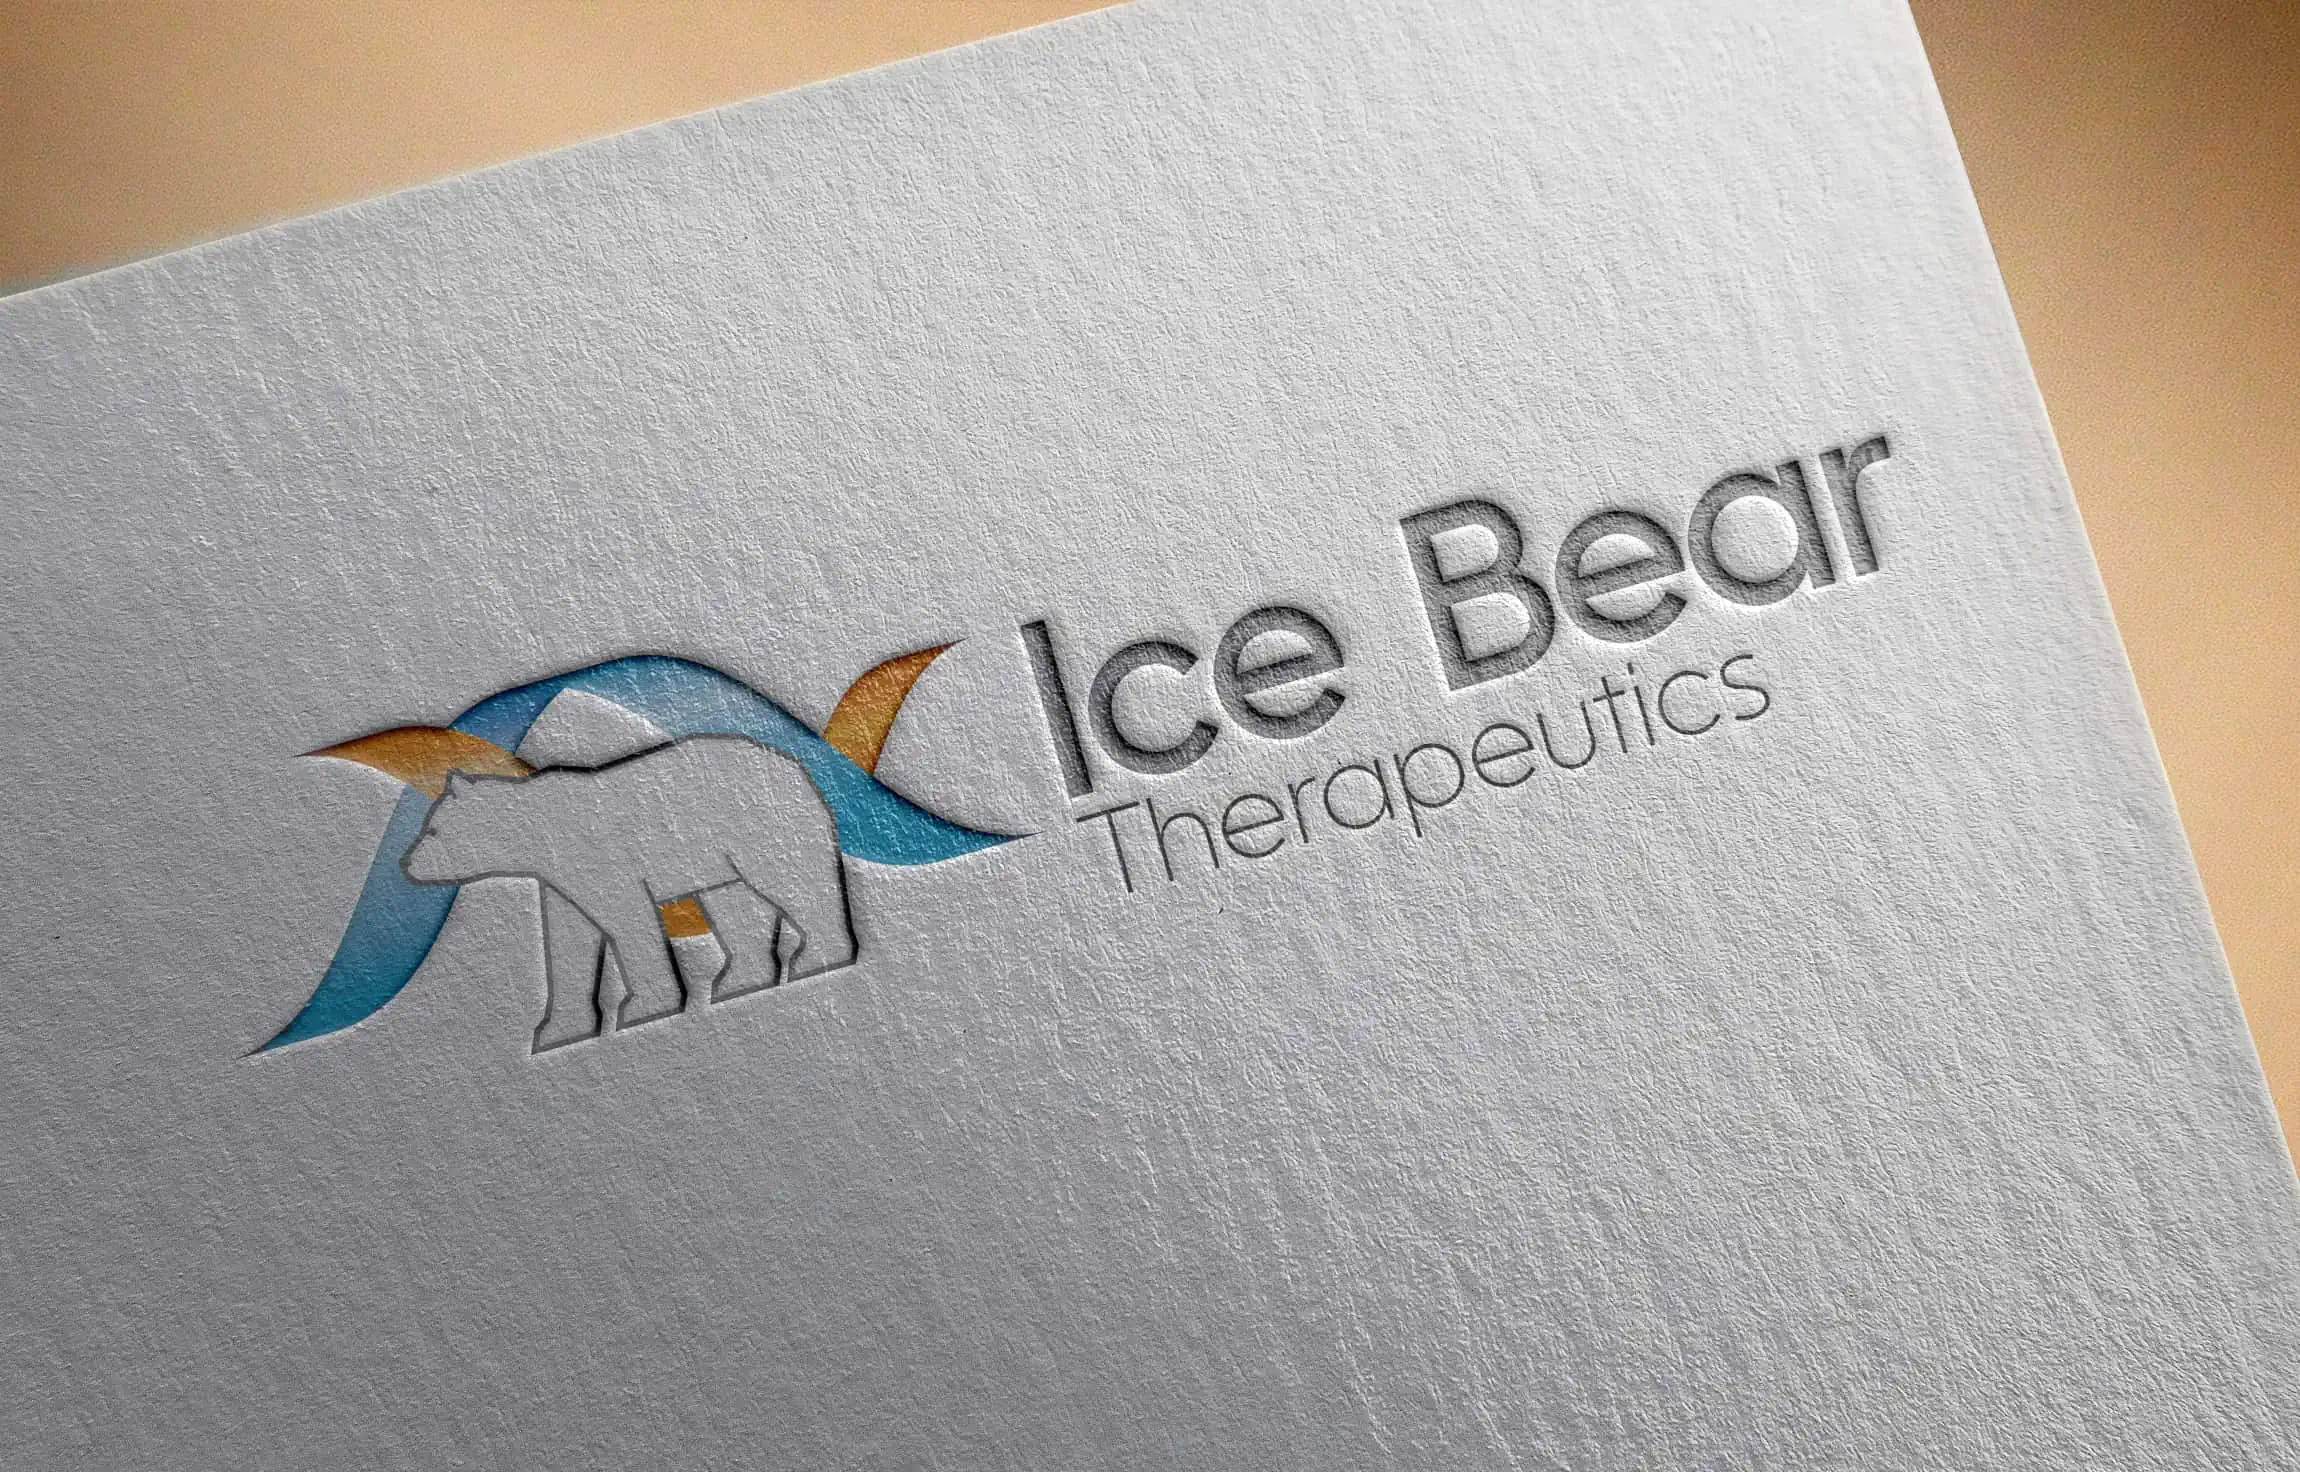 IceBear Therapeutics